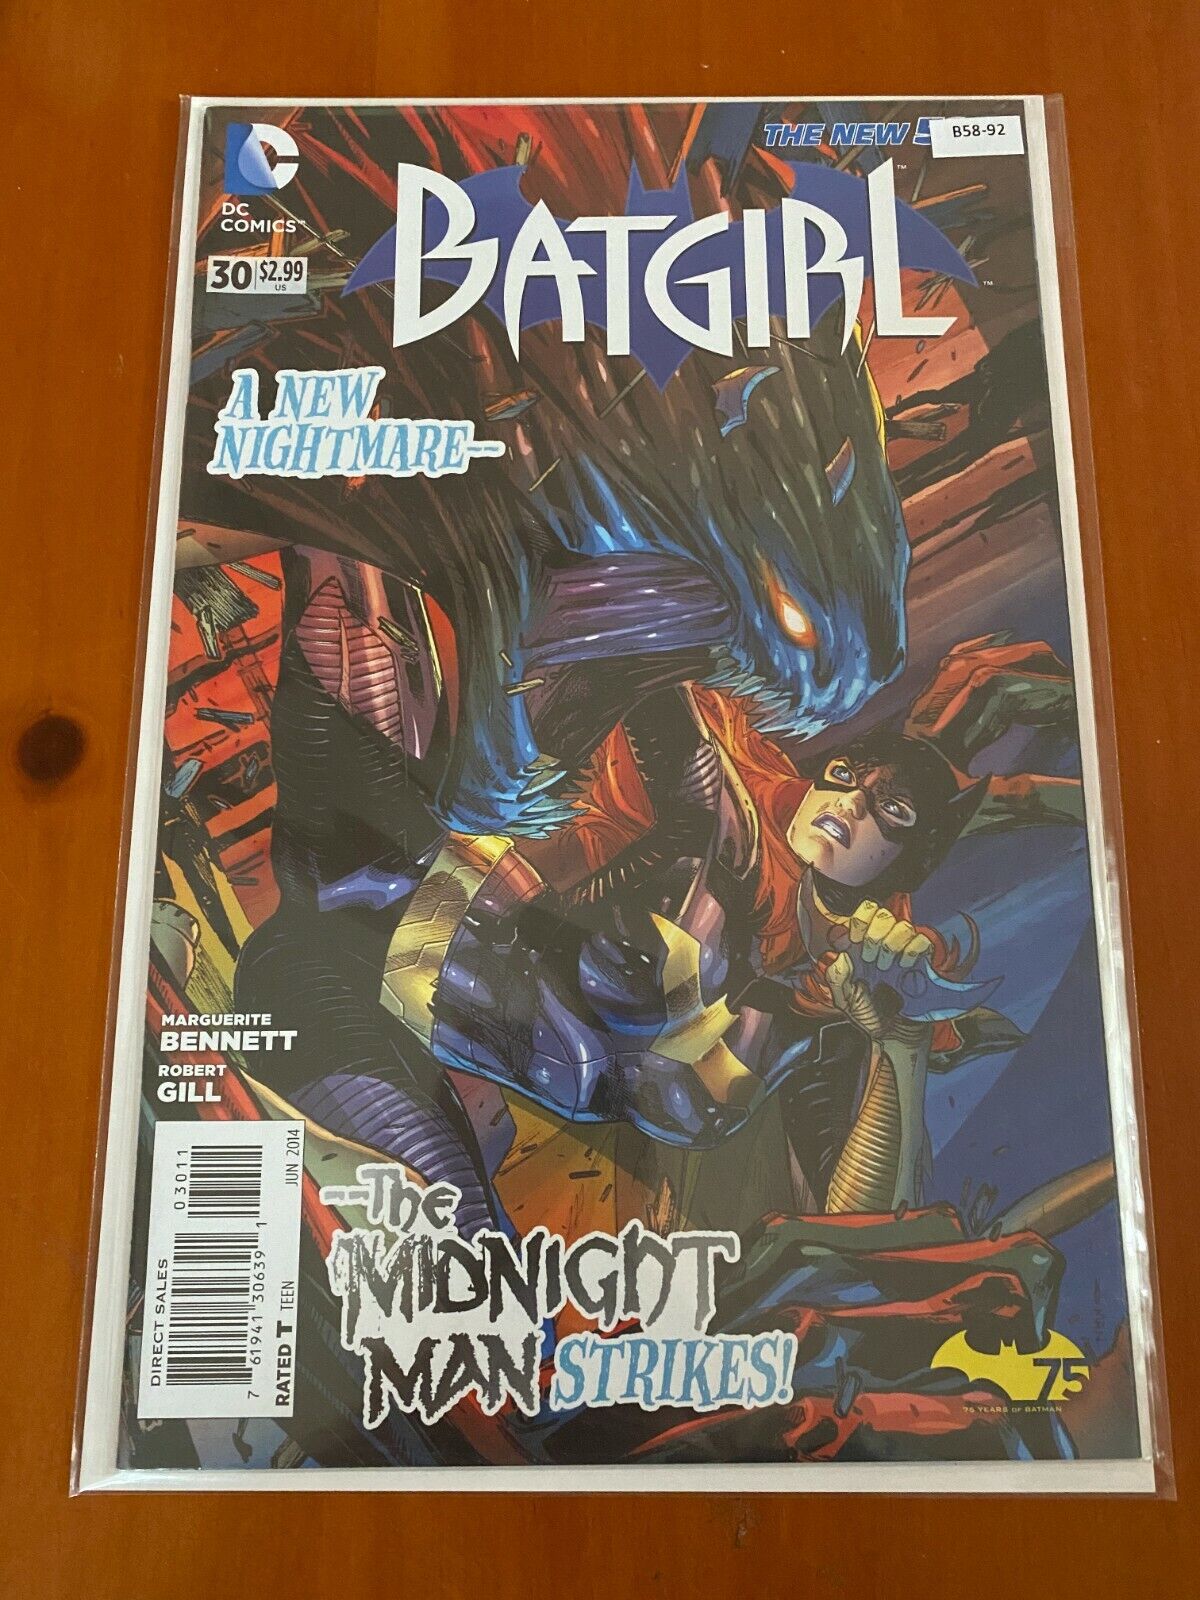 Batgirl 30 - High Grade Comic Book - B58-92